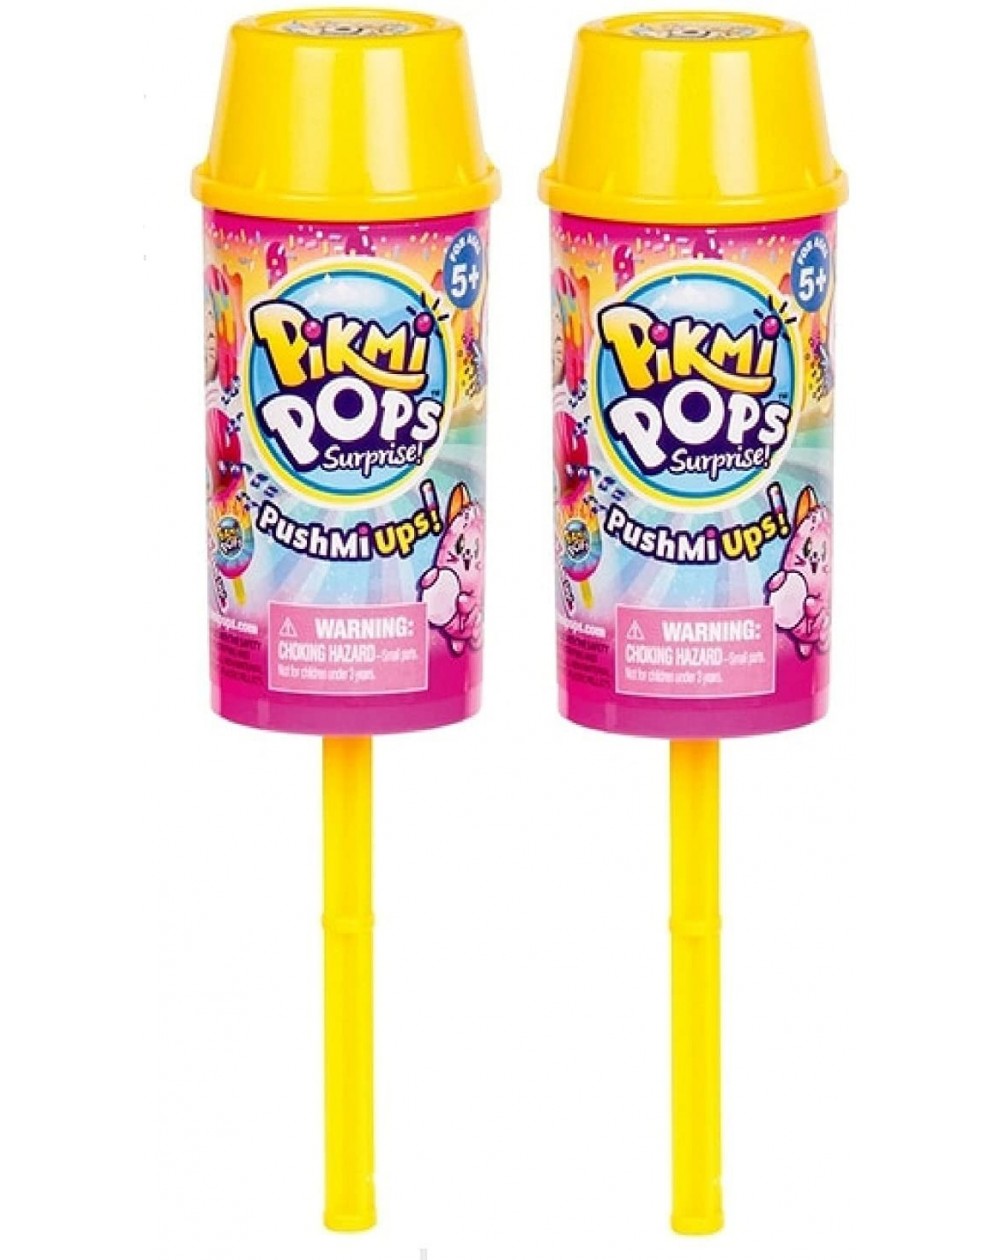 Confetti Pikmi Pops Surprise! PushMi Ups! Series 2 LOT of 2 Mystery Packs - CK18CEQCXNC $18.35